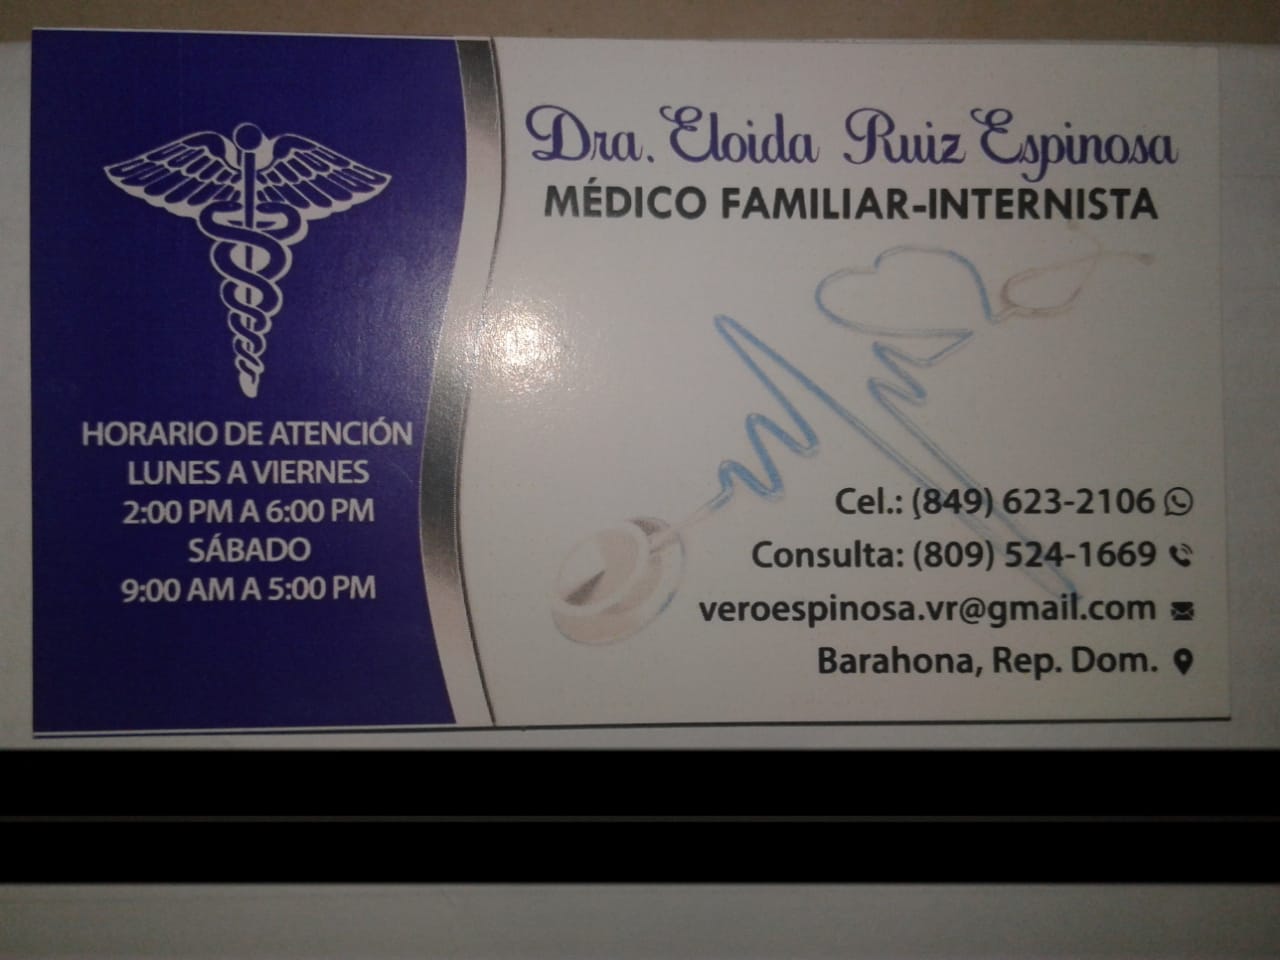 DRA. ELOIDA RUIZ ESPINOSA MEDICO FAMILIAR-INTERNISTA